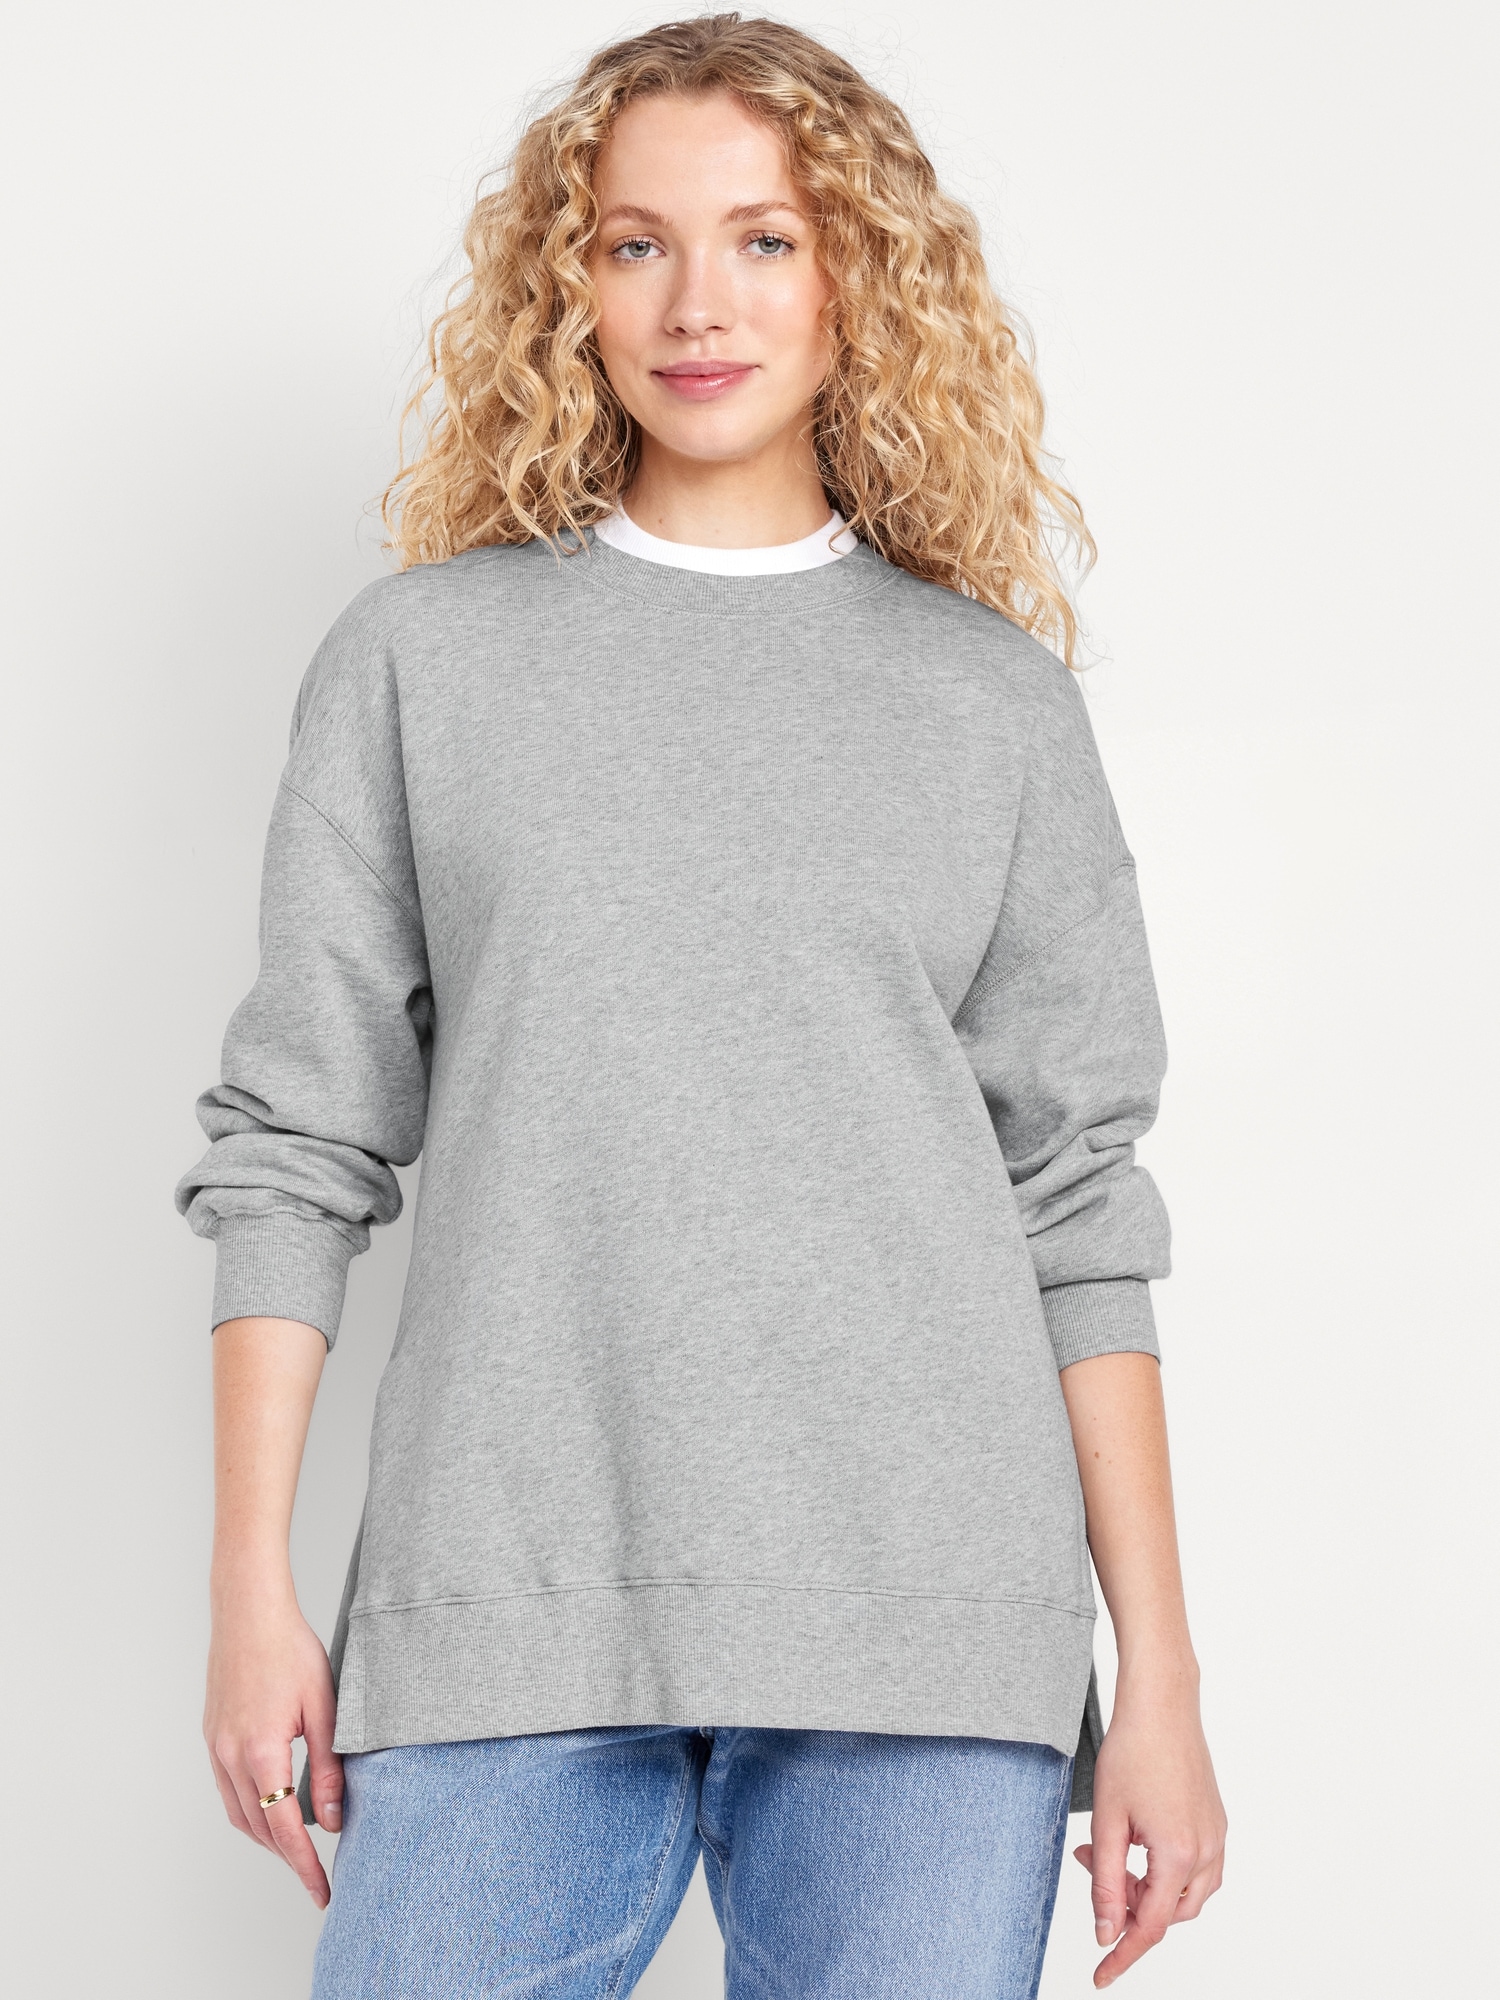 SoComfy Tunic Sweatshirt